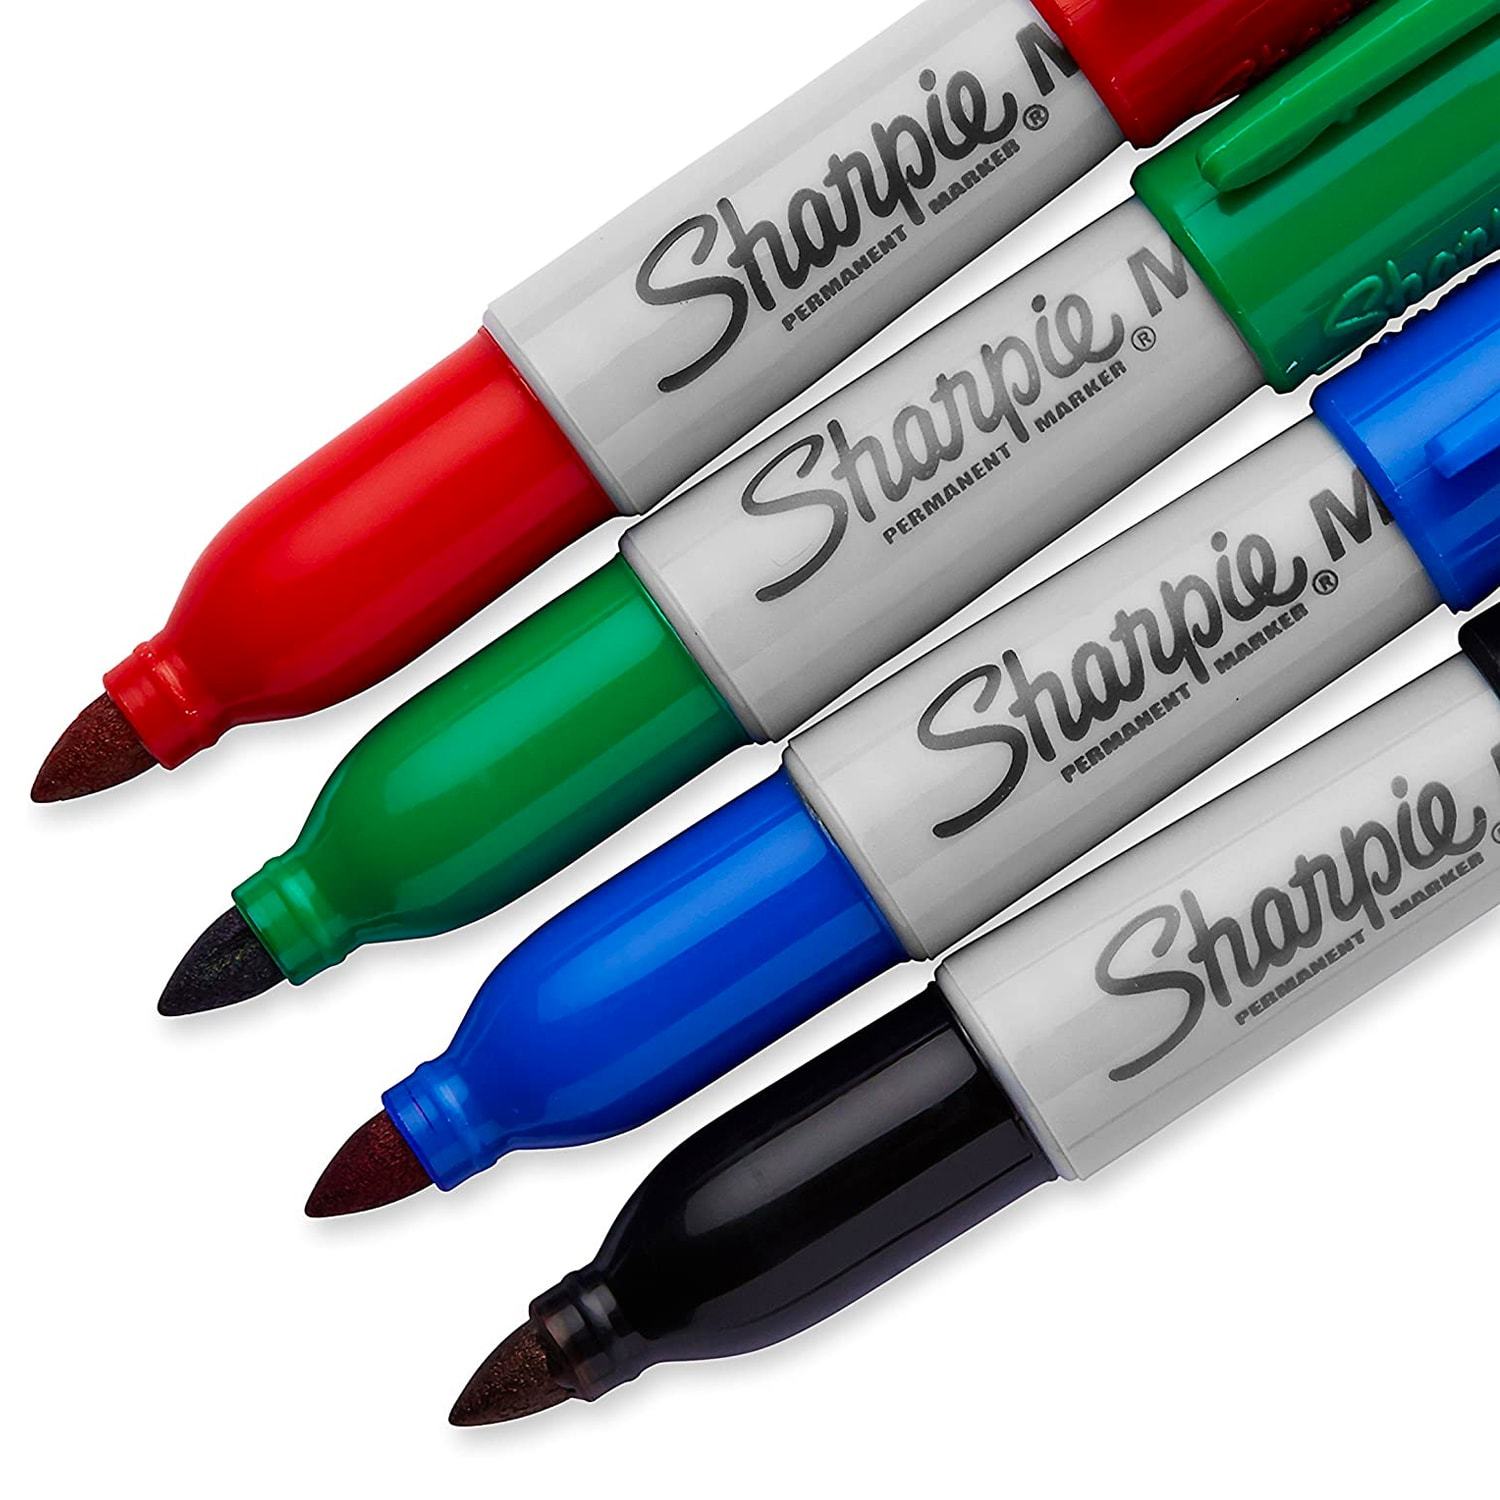 Sharpie 30174 Permanent Marker Set Of 4 (Red, Blue, Green, Black